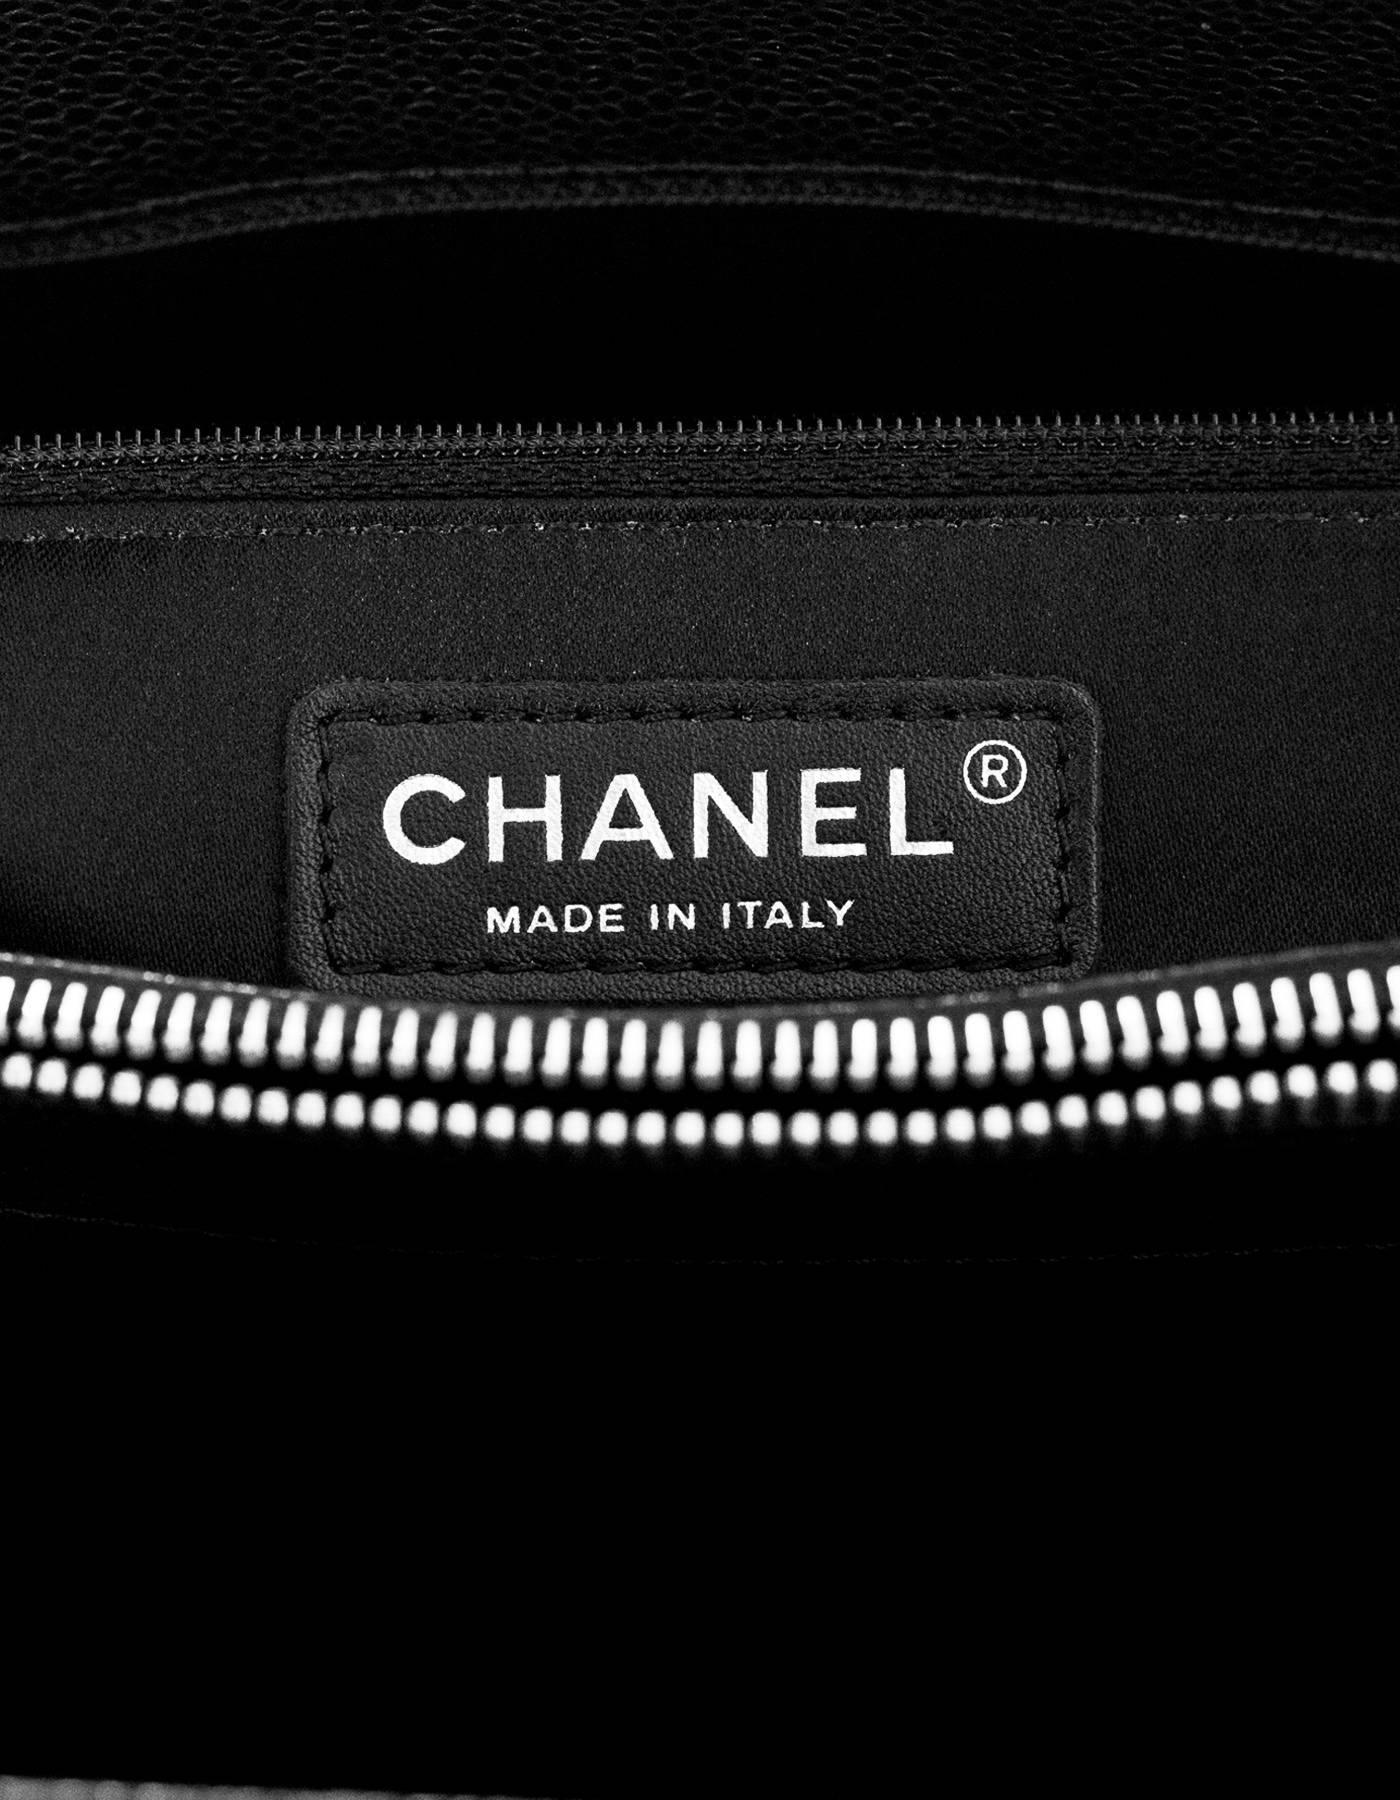 Chanel Black Caviar Leather GST Grand Shopper Tote Bag with SHW 3